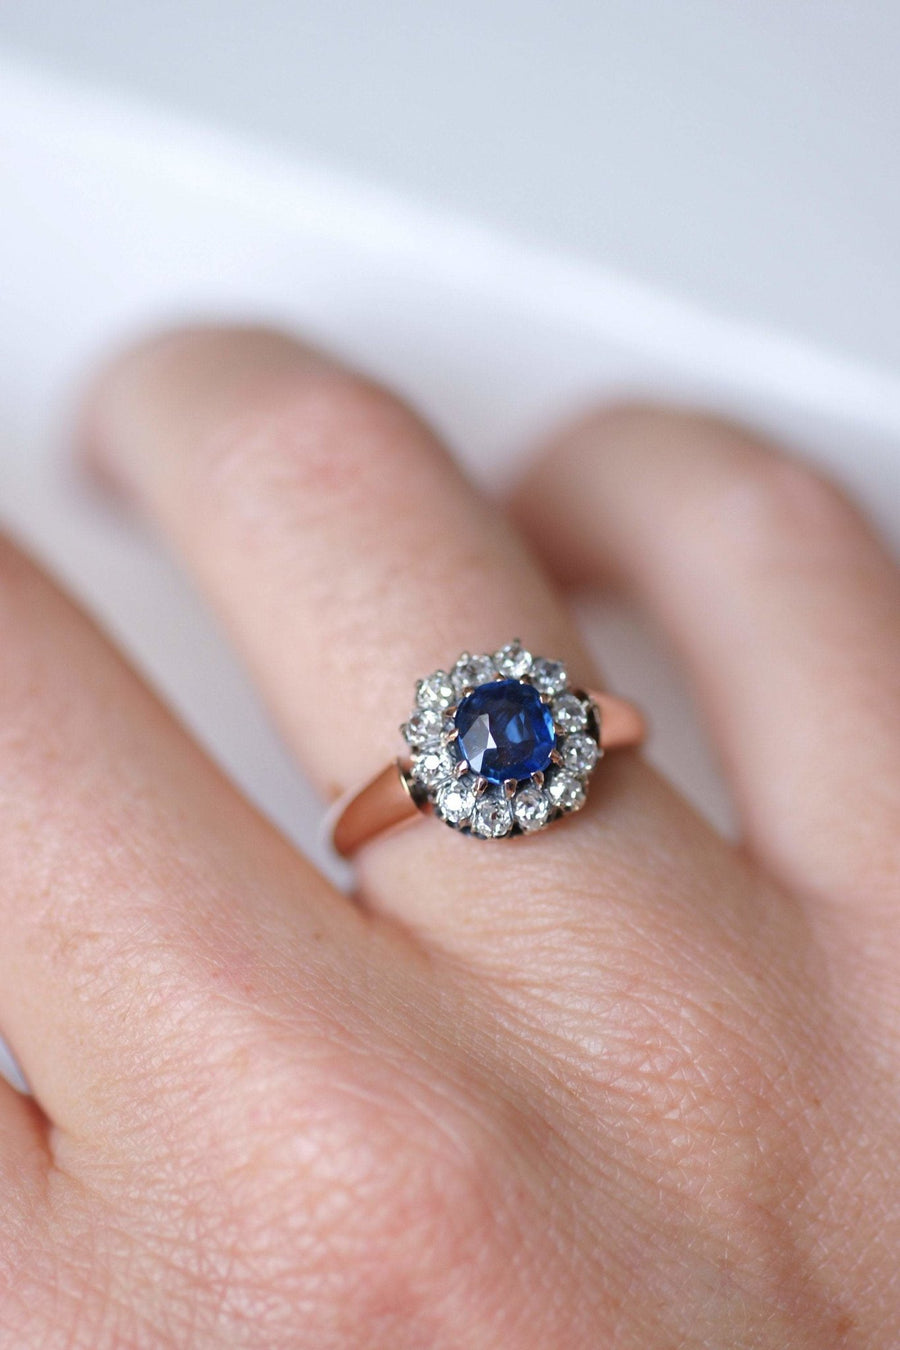 Unheated sapphire daisy ring with diamonds - Penelope Gallery